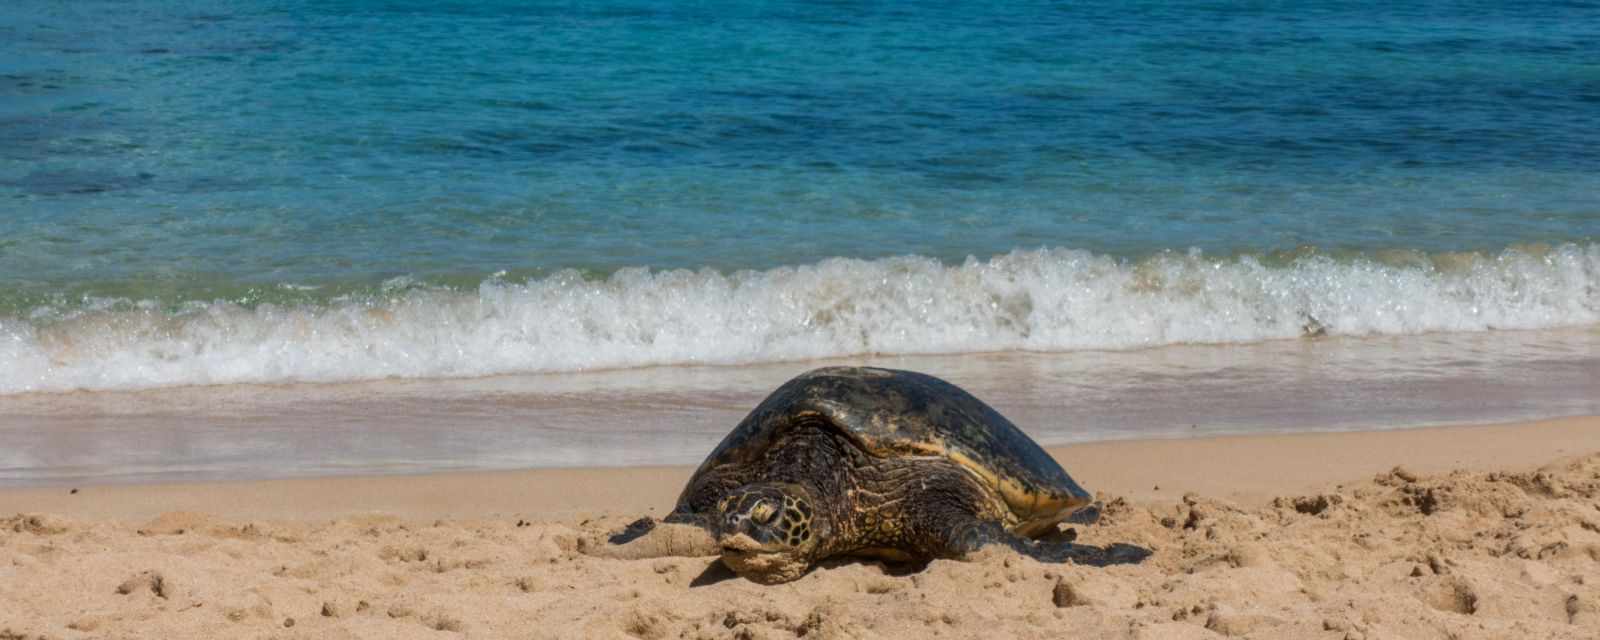 Laniakea Turtle Beach in Oahu - Hawaii - 5 Tips